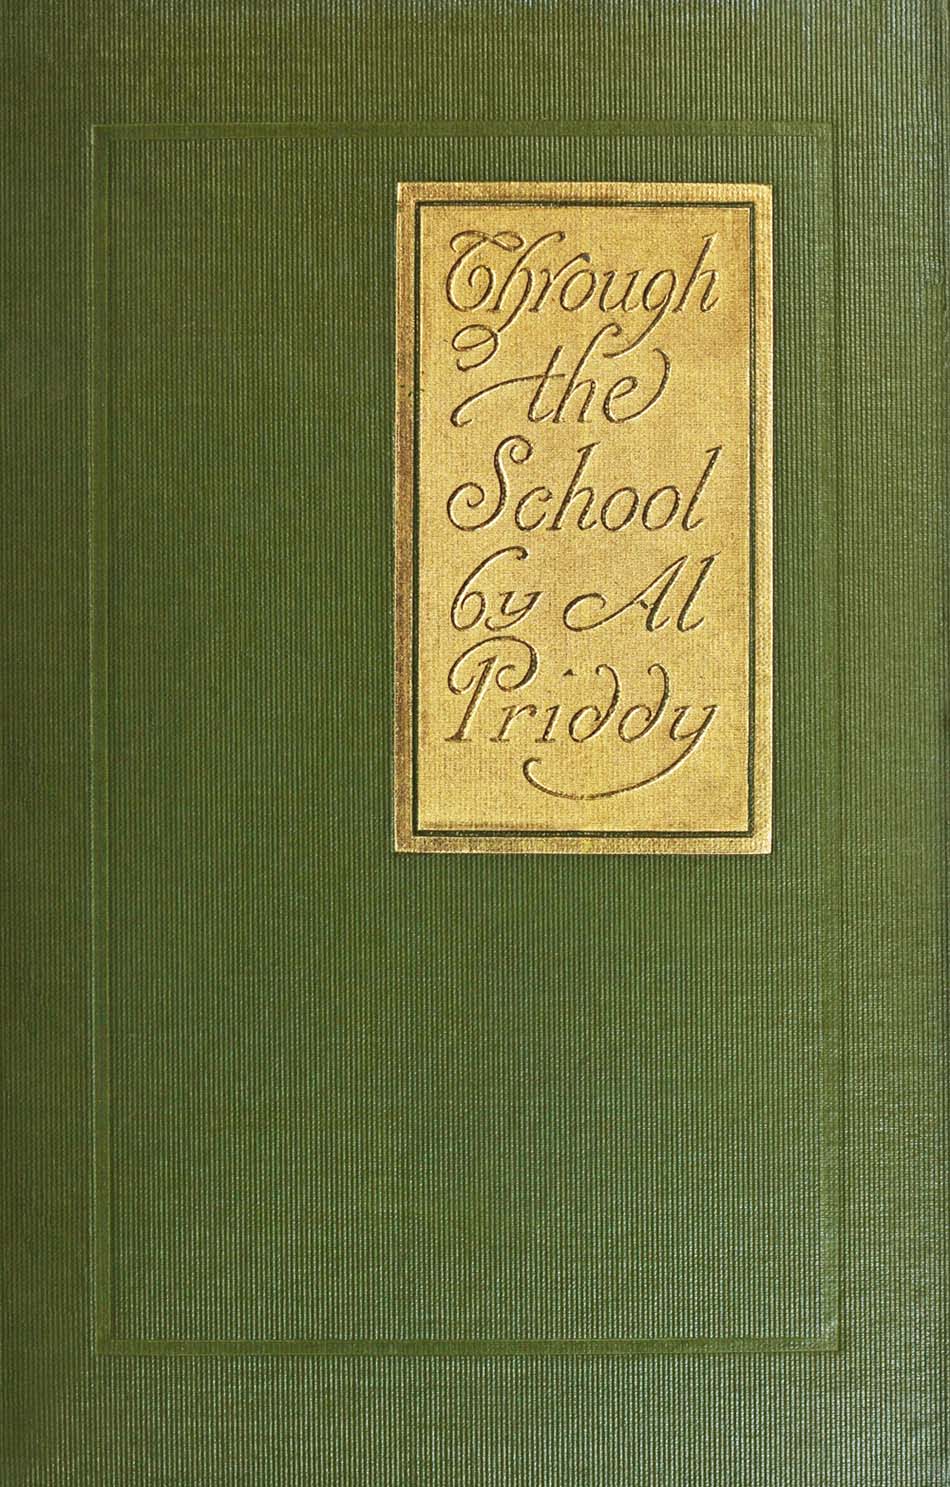 Through the School, by Al Priddy—A Project Gutenberg eBook